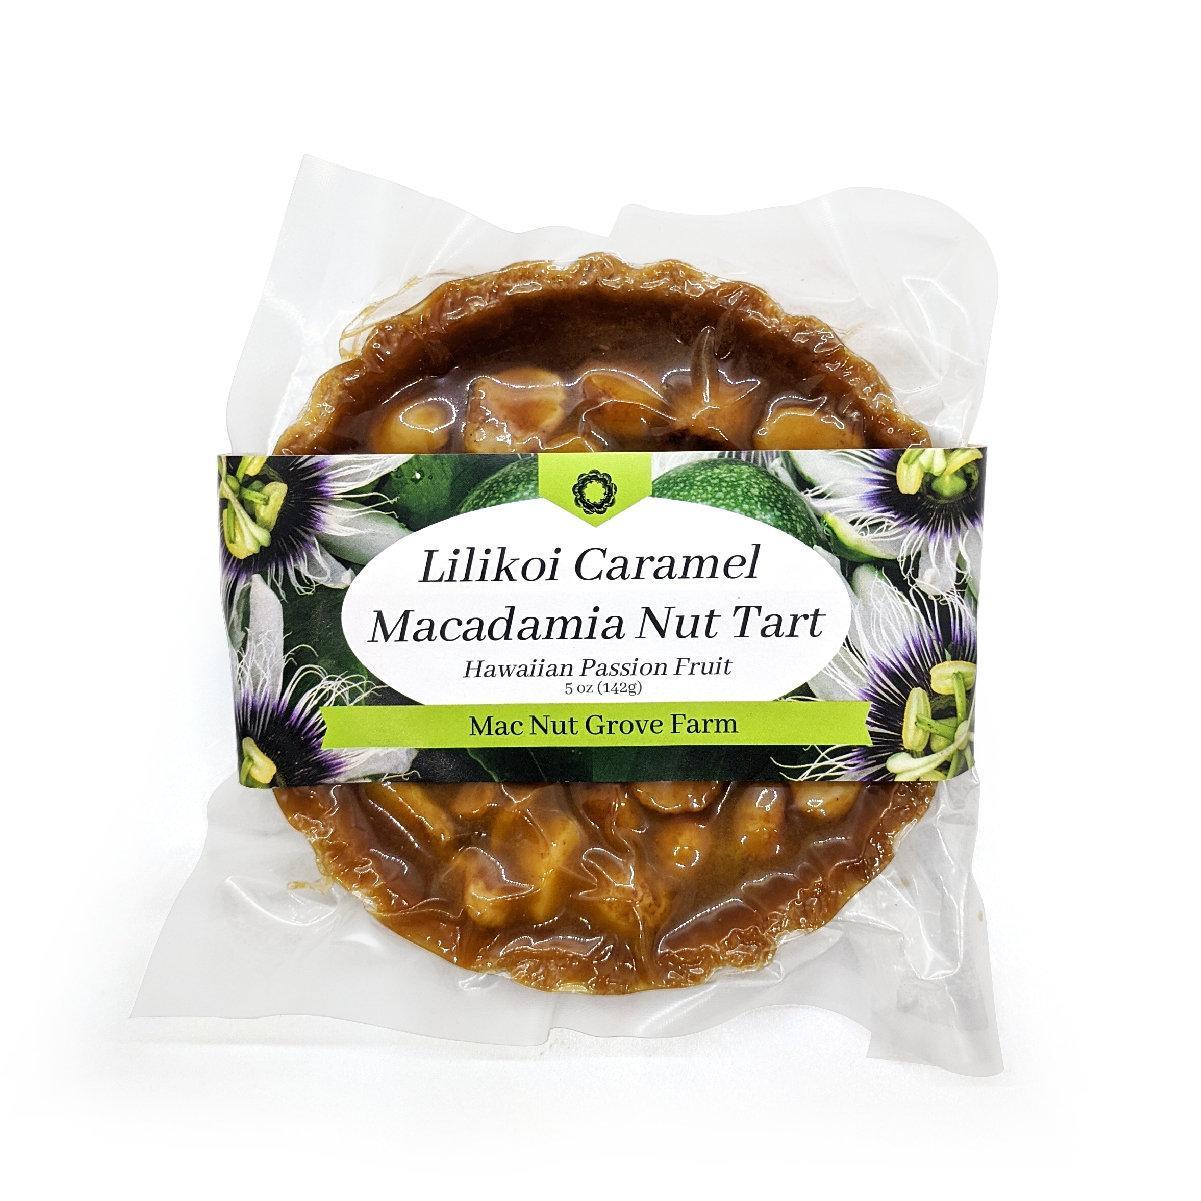 Mac Nut Grove Farm - 'Lilikoi Caramel Macadamia' Nut Tart (5OZ)